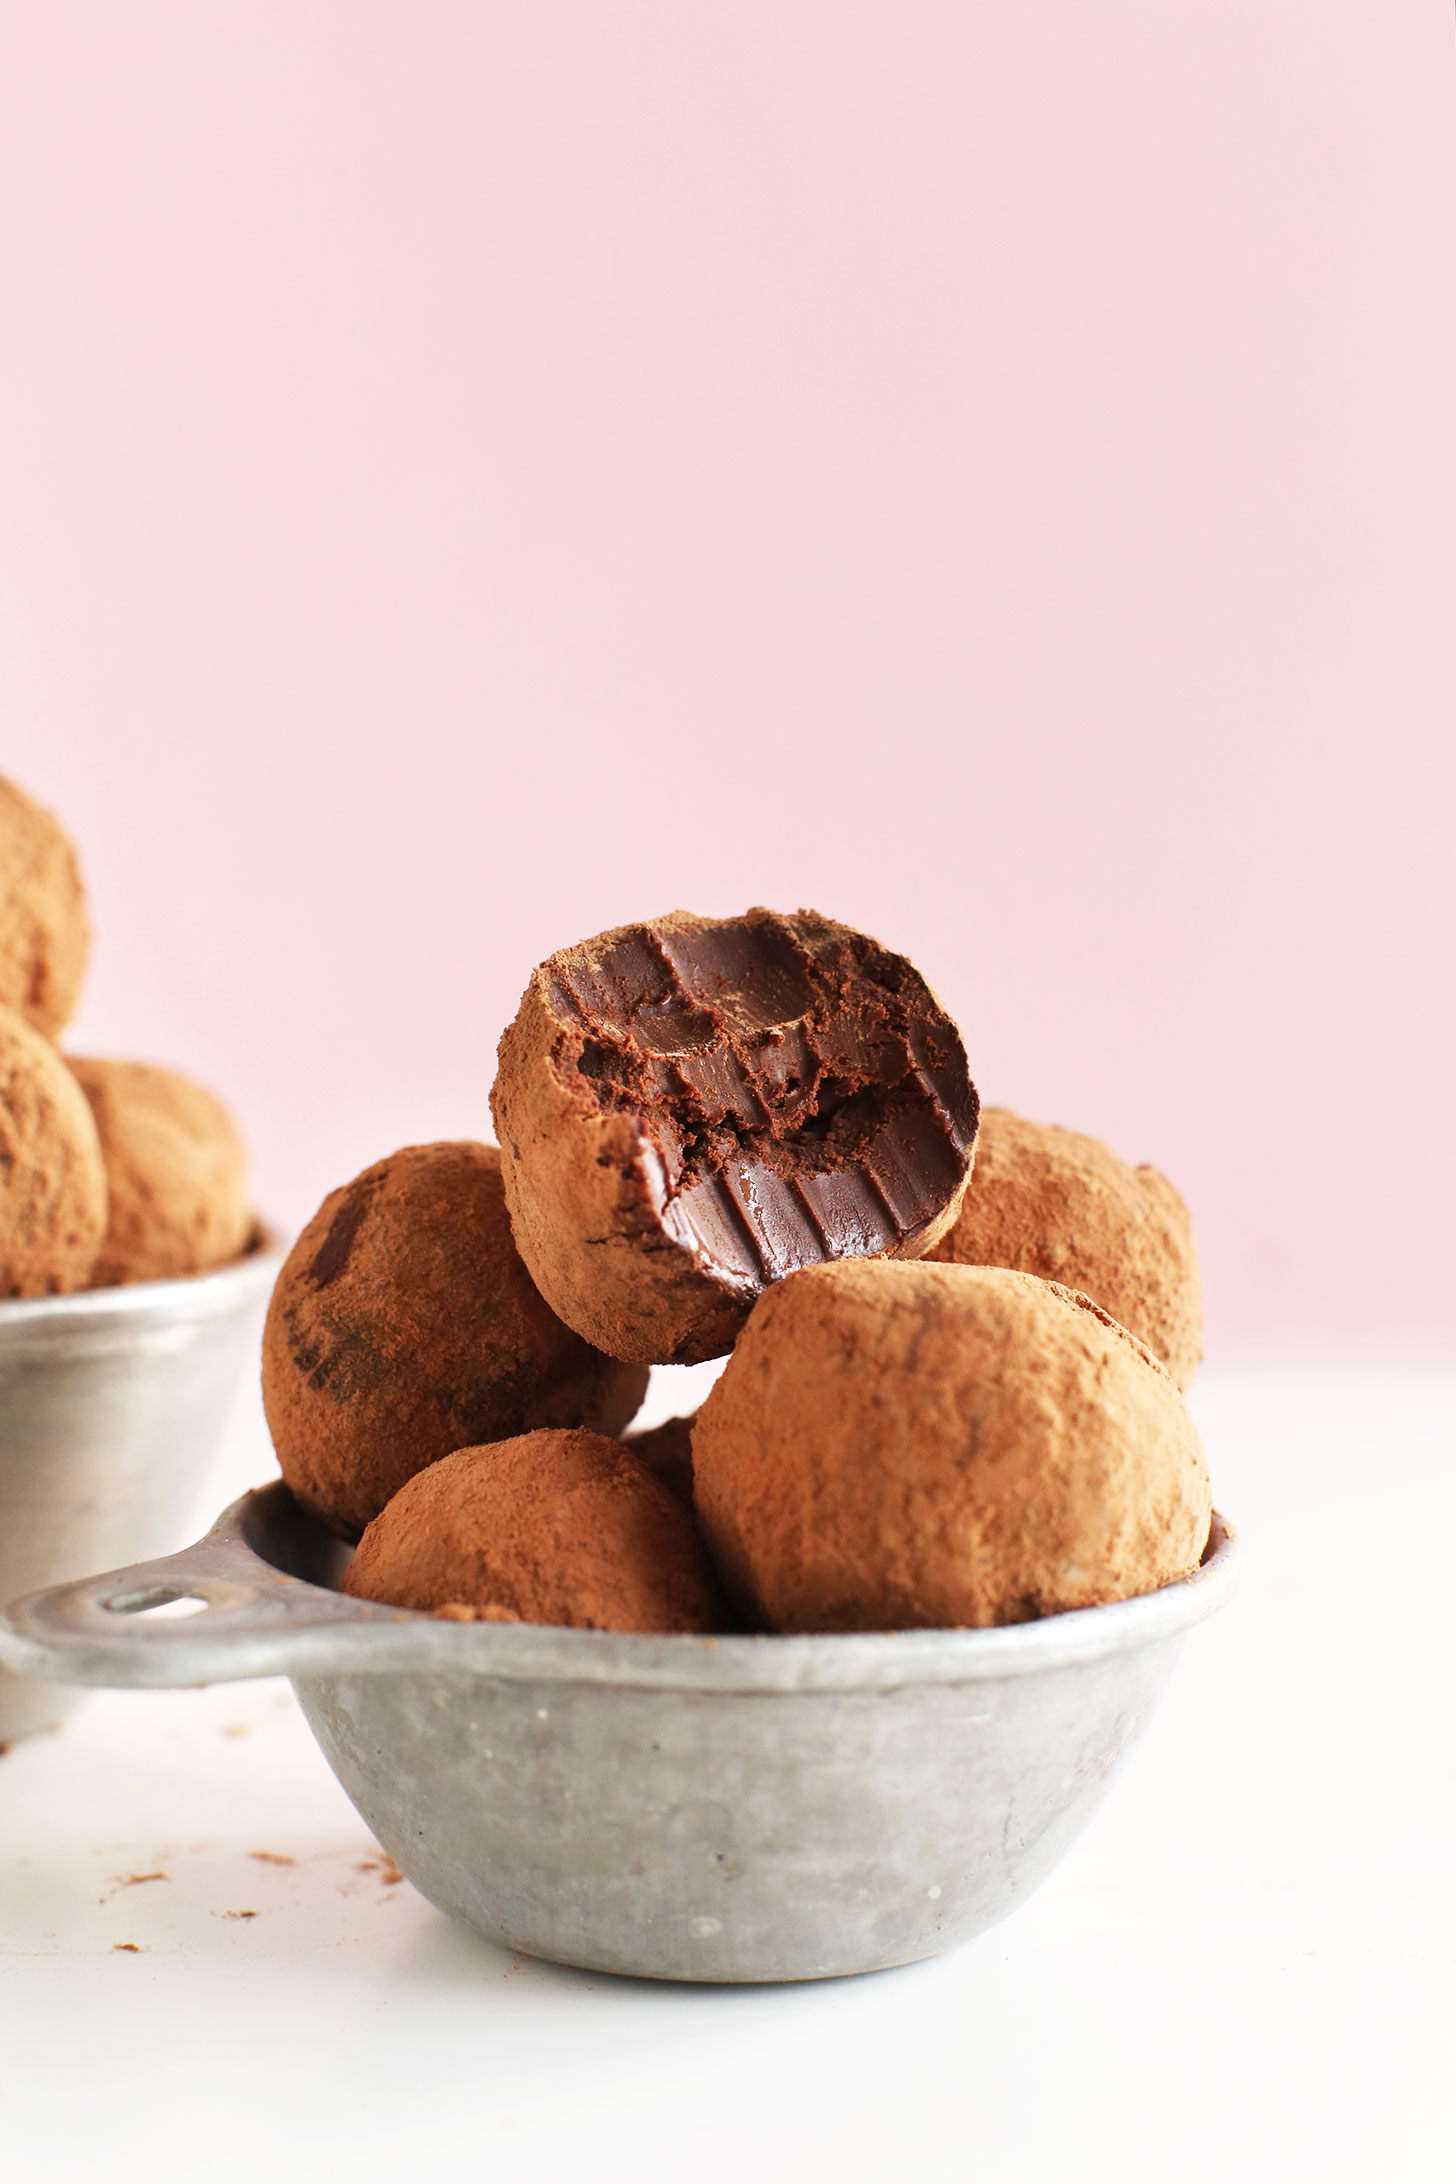 https://minimalistbaker.com/wp-content/uploads/2015/08/EASY-2-Ingredient-Dark-Chocolate-VEGAN-TRUFFLES-Creamy-rich-SO-delicious-vegan-glutenfree-chocolate-truffles-dessert-minimalistbaker.jpg